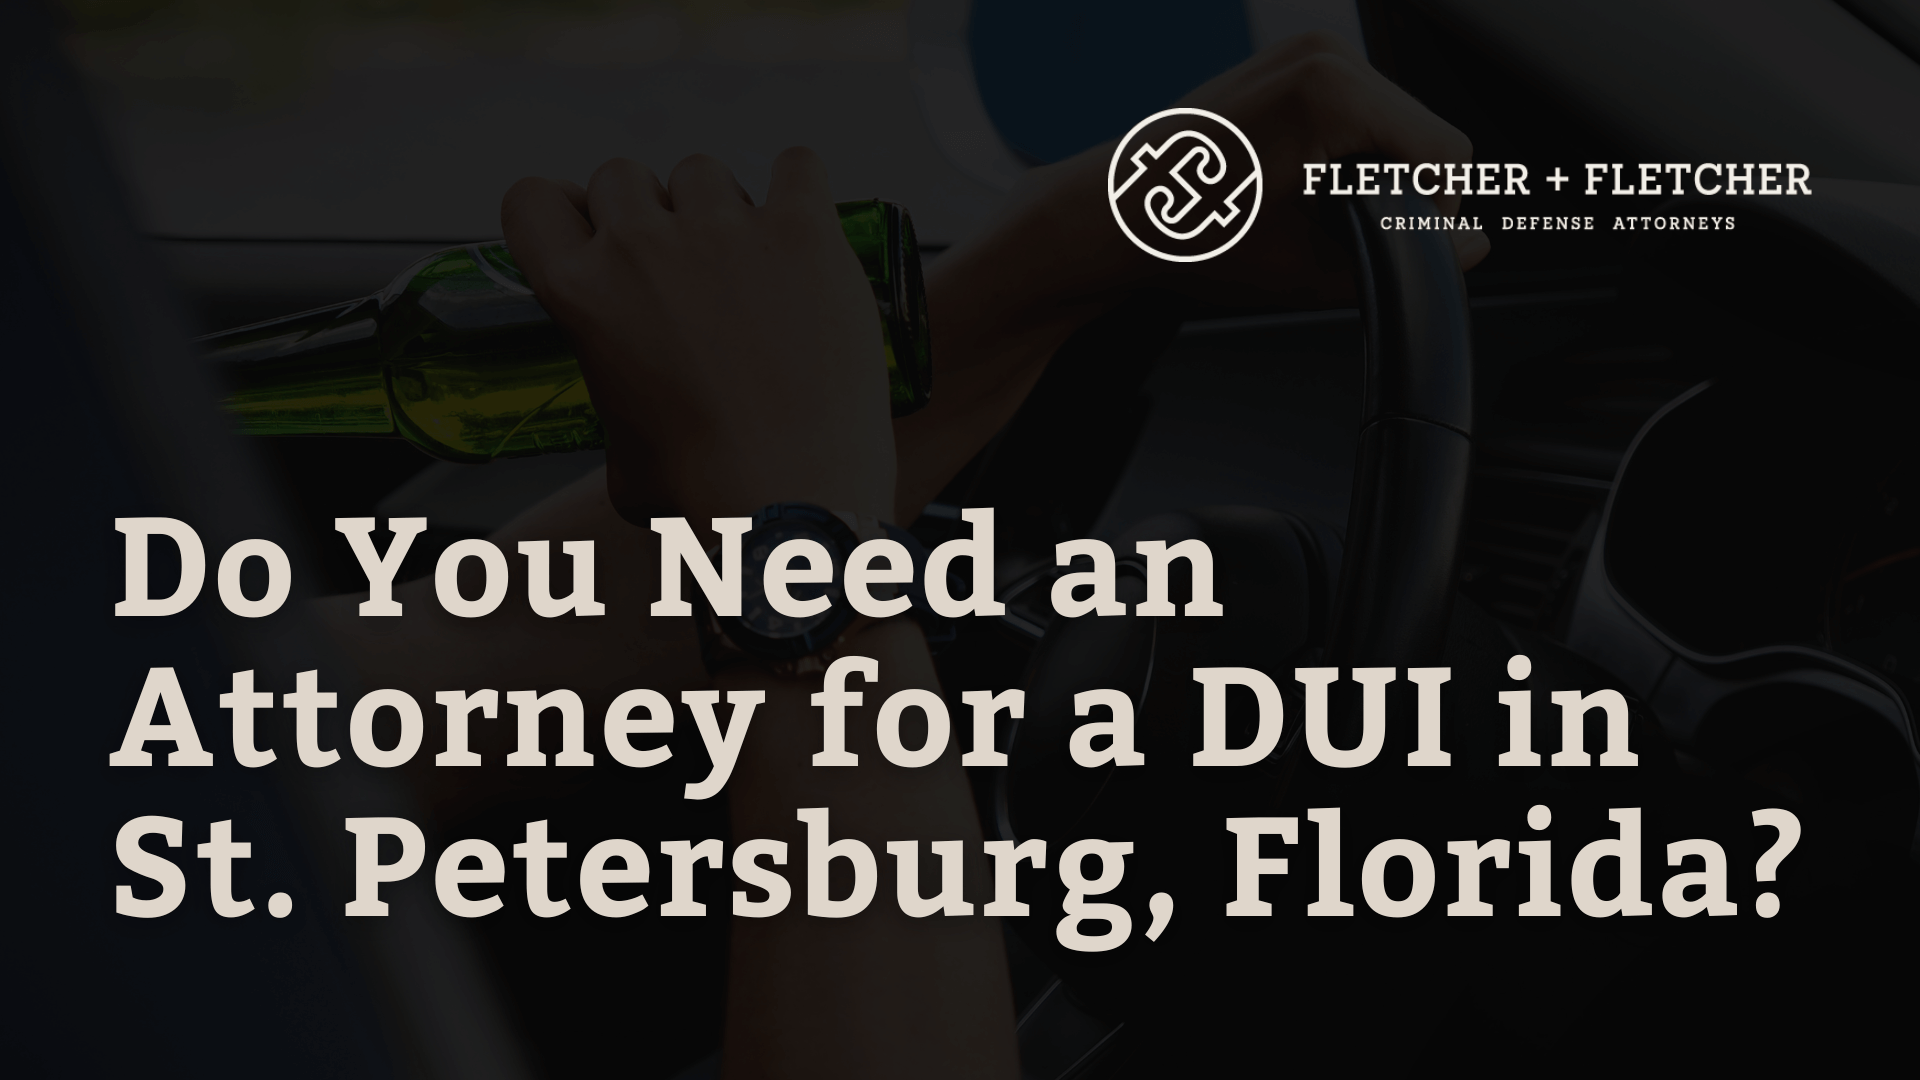 Attorney for a DUI in St. Petersburg, Florida - fletcher and fletcher - st pete florida criminal defense